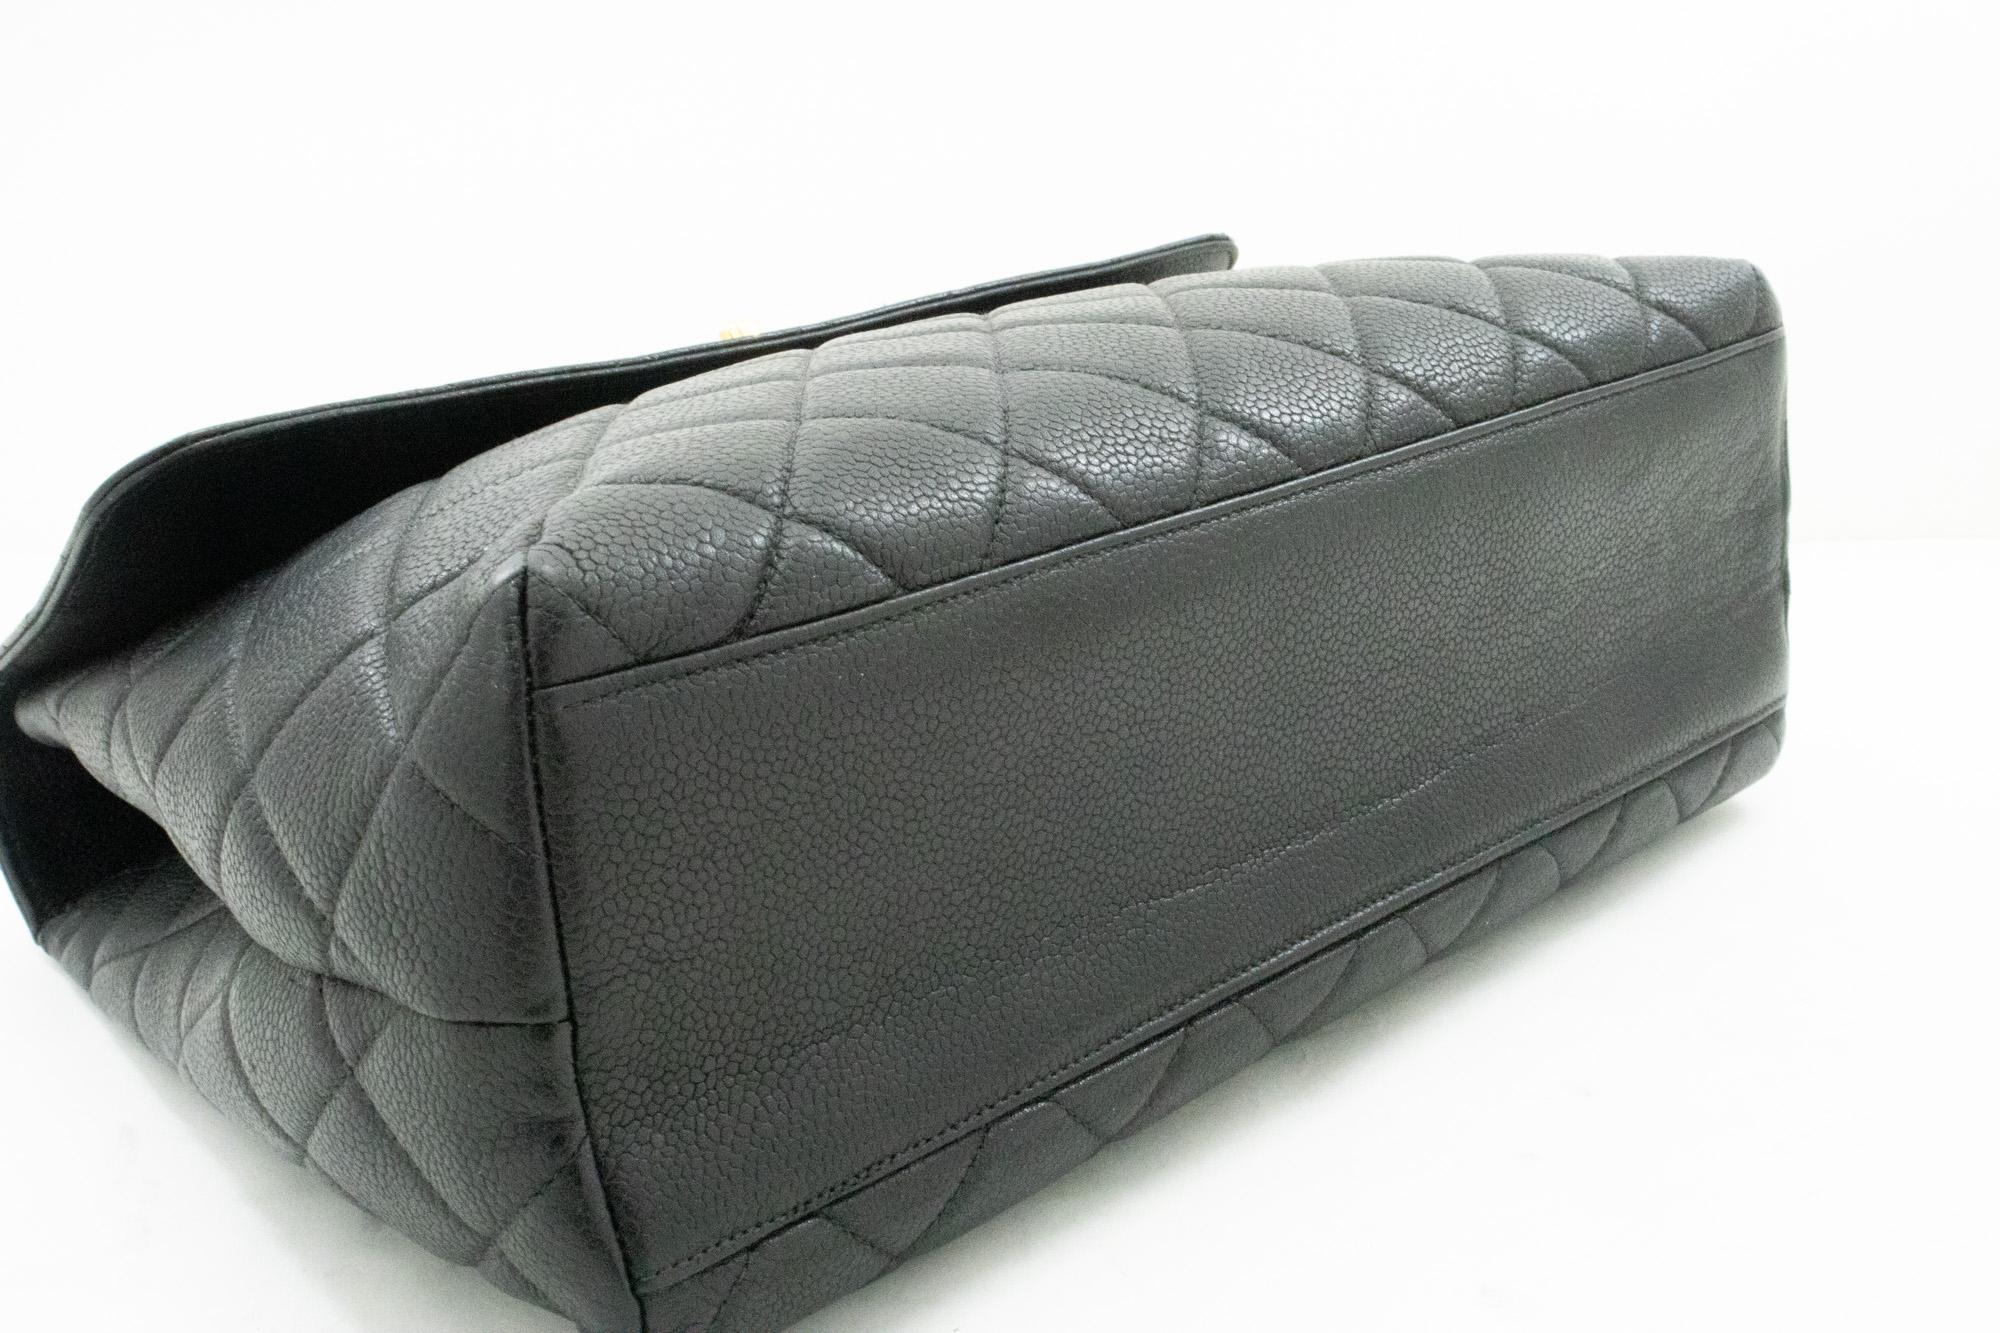 Women's CHANEL Caviar Handbag Top Handle Bag Kelly Black Flap Leather Gold